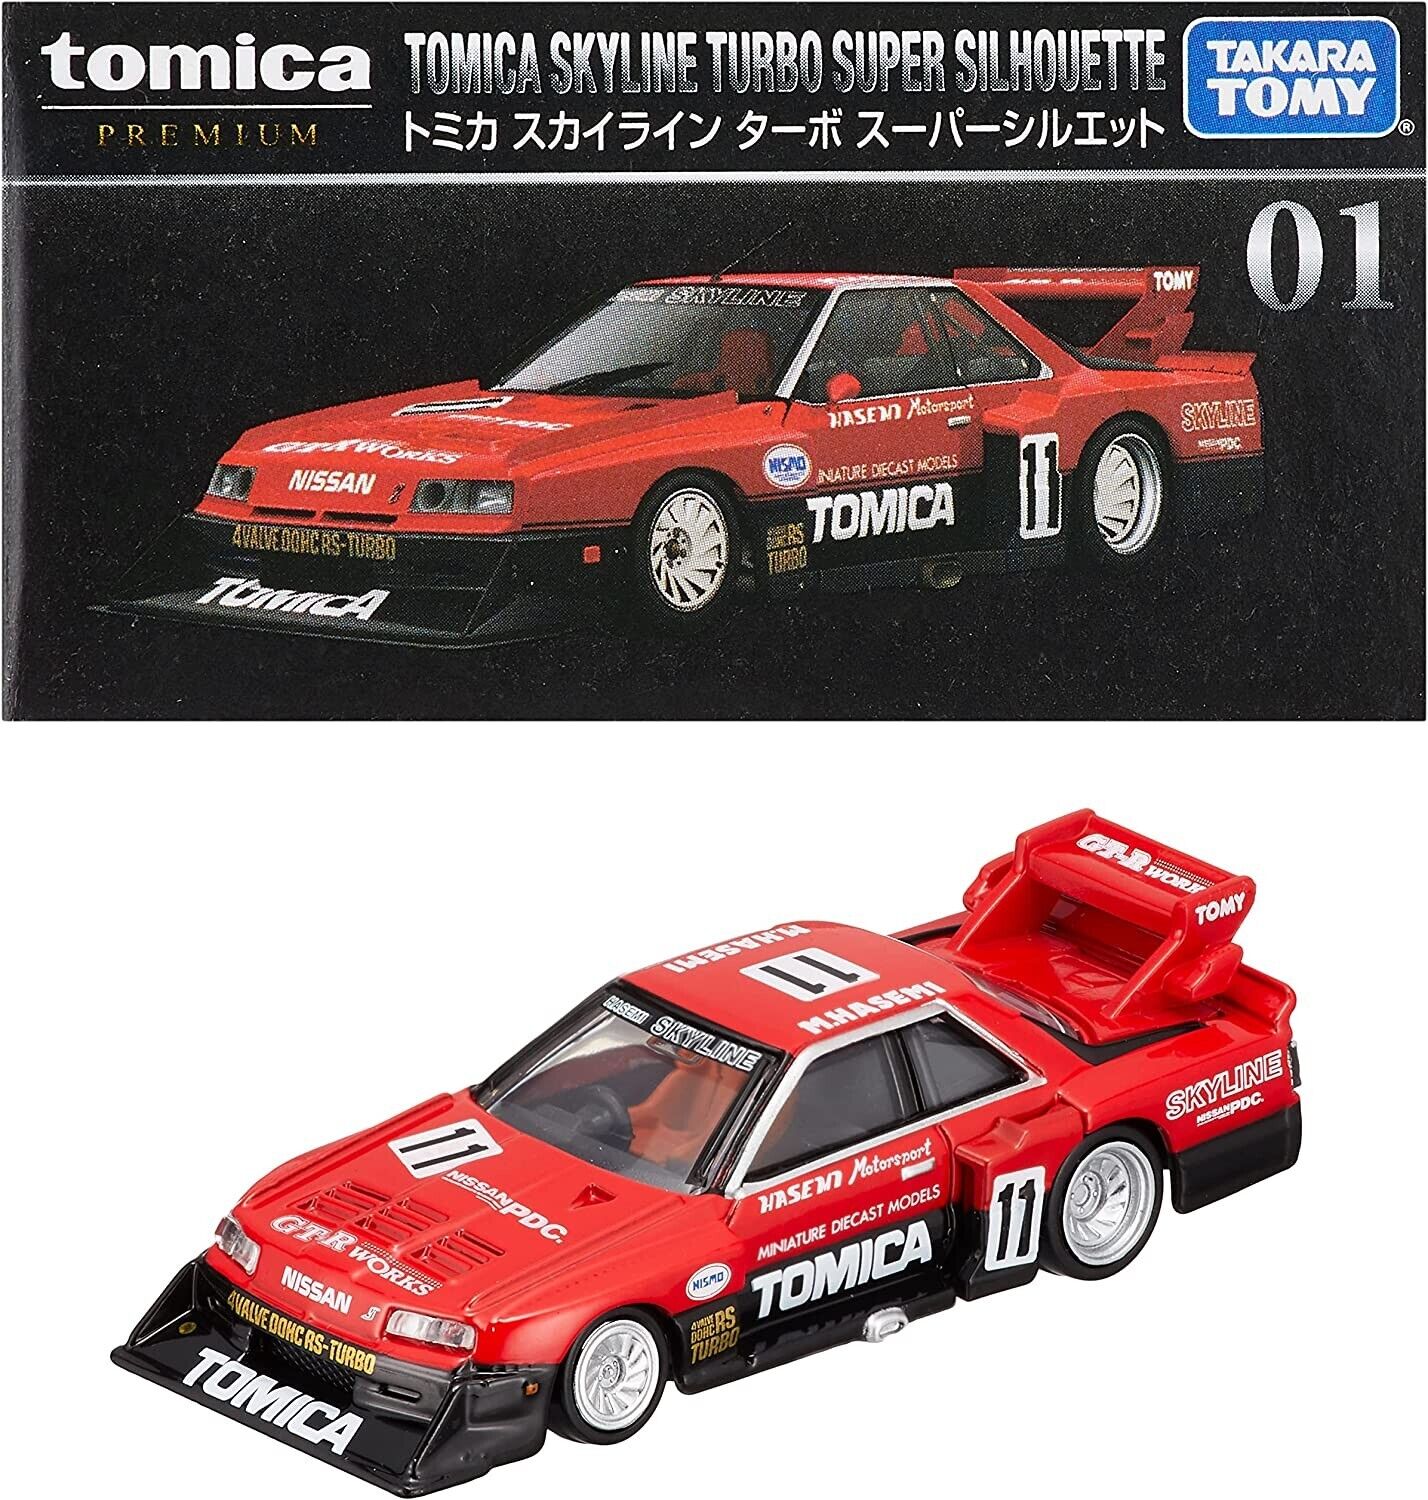 Tomica Premium No.01 Tomica Skyline Turbo Super Silhouette